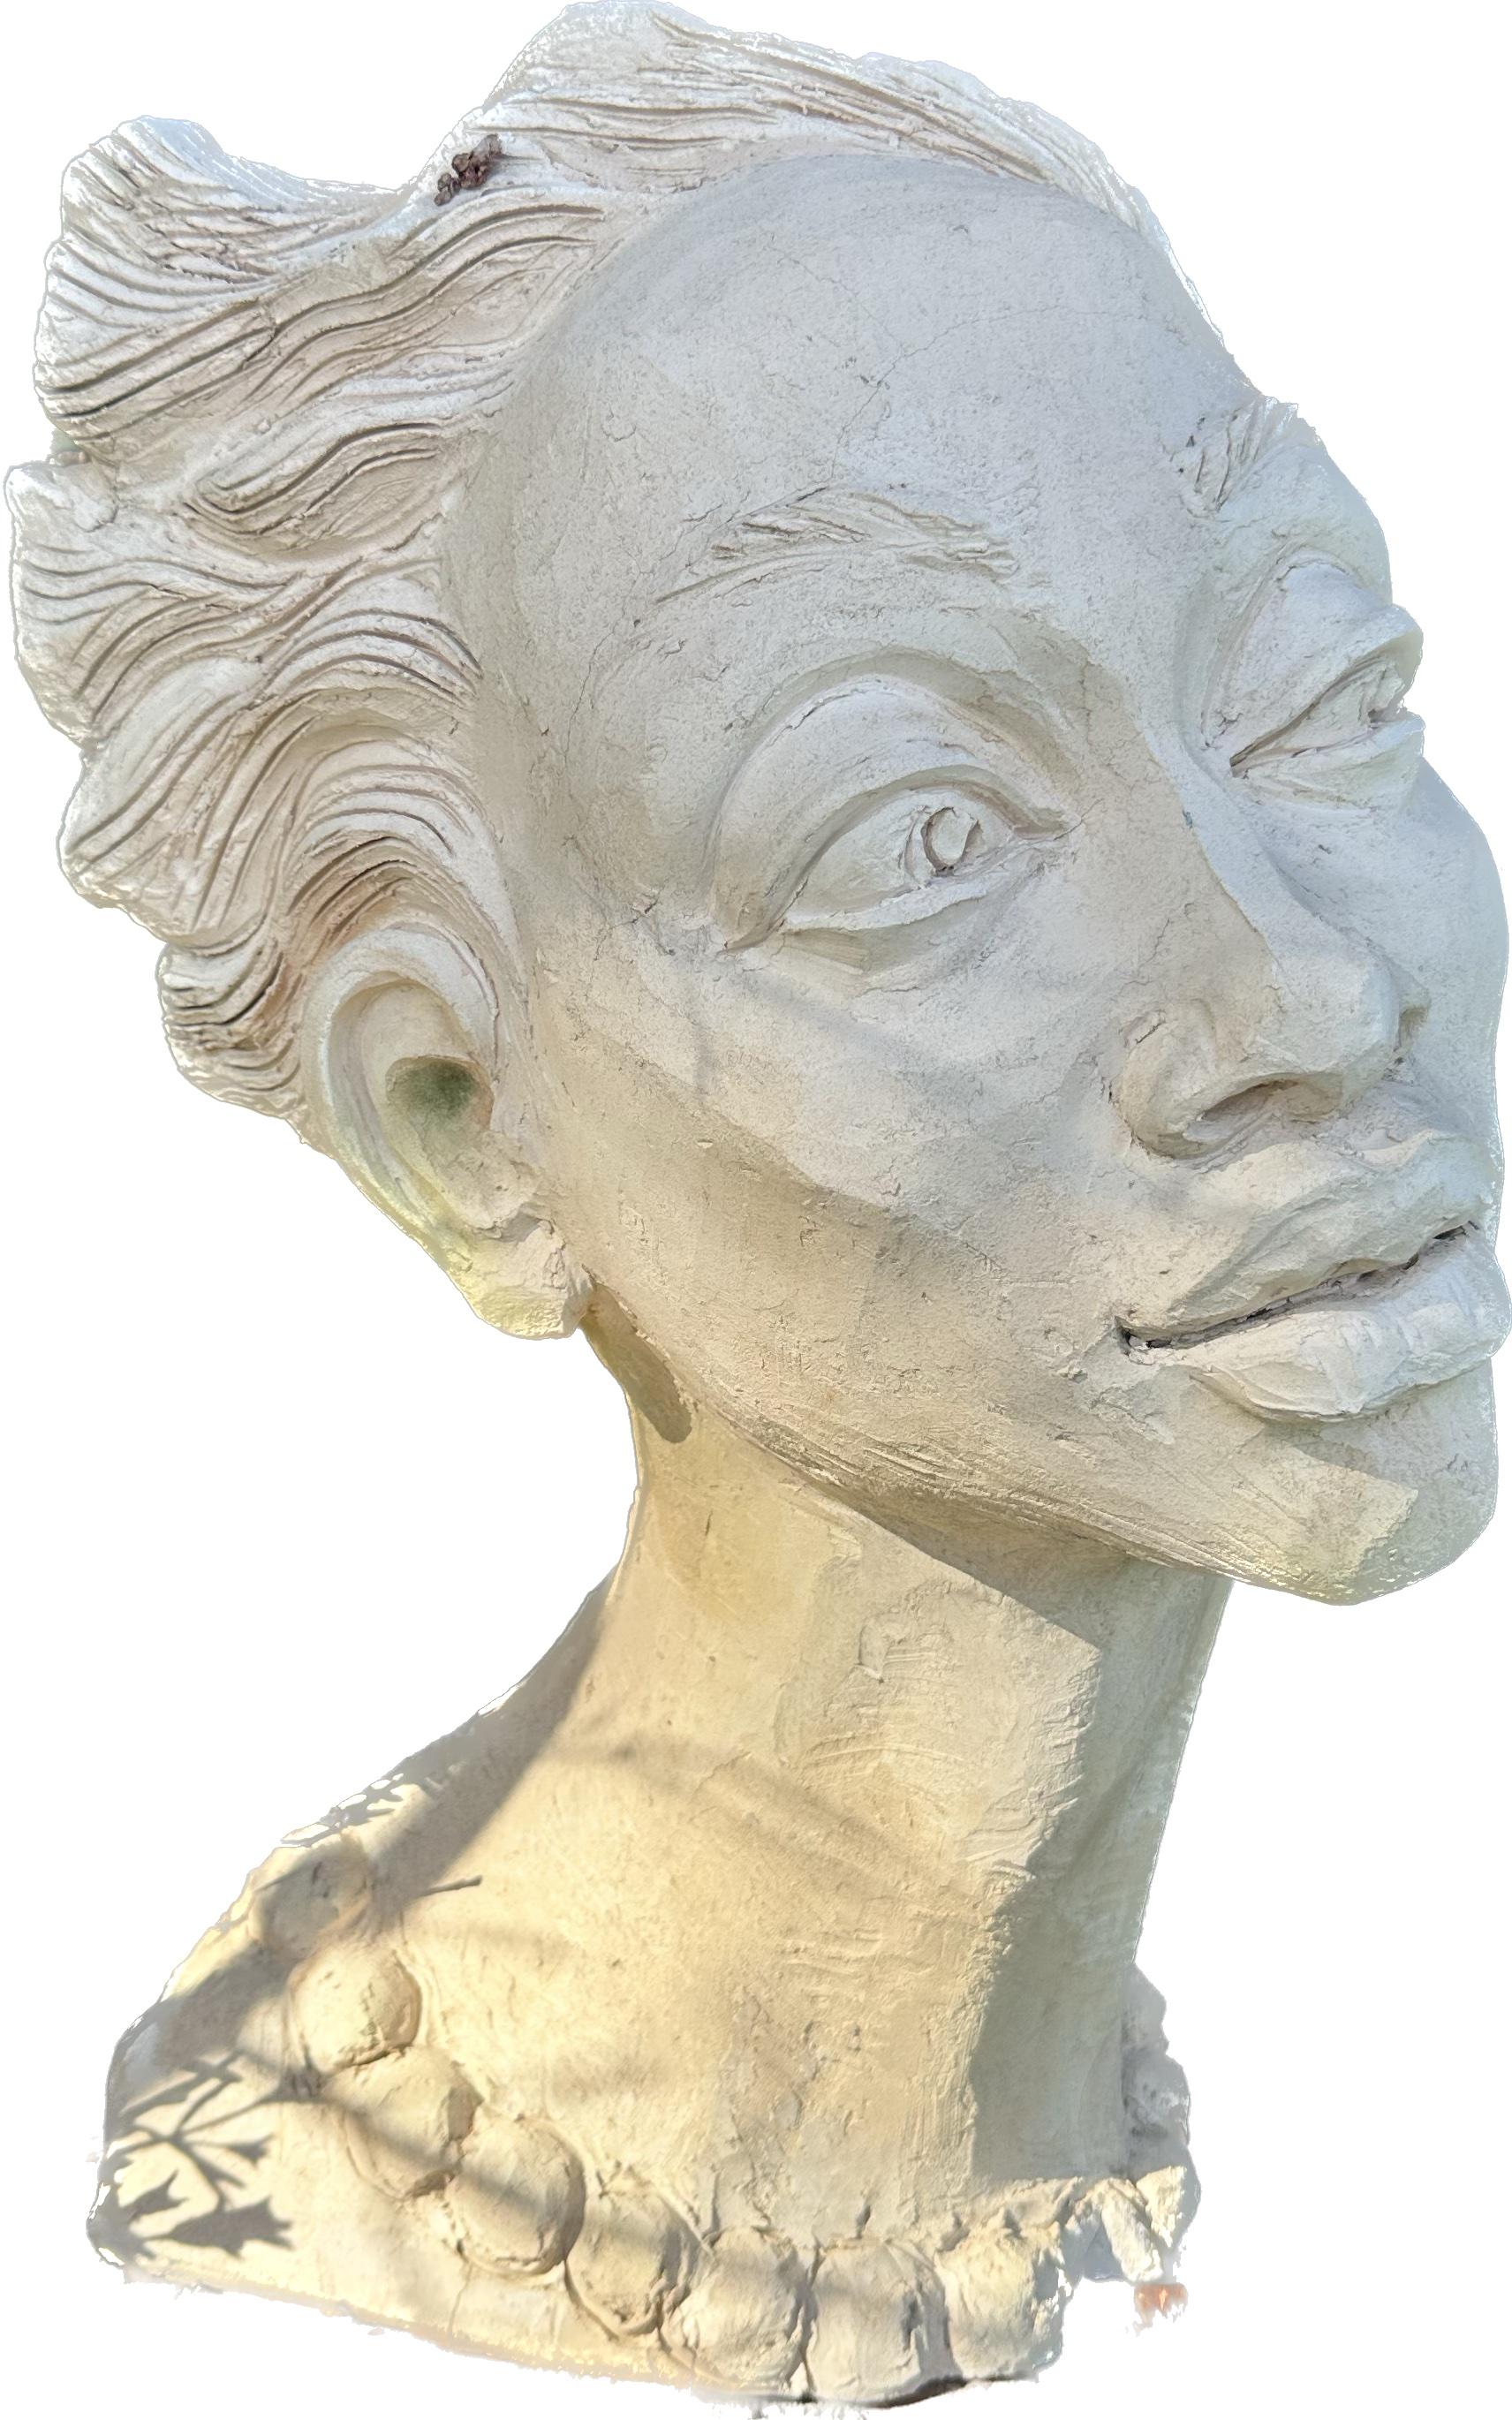 Artist:  (Garo) Karapet Balakeseryan  
Medium: Ceramic, Clay, Handmade, One of a Kind 
Year: 2023
Style: Classic, Impressionism, 
Subject: Portrait of Woman,
Size: 21